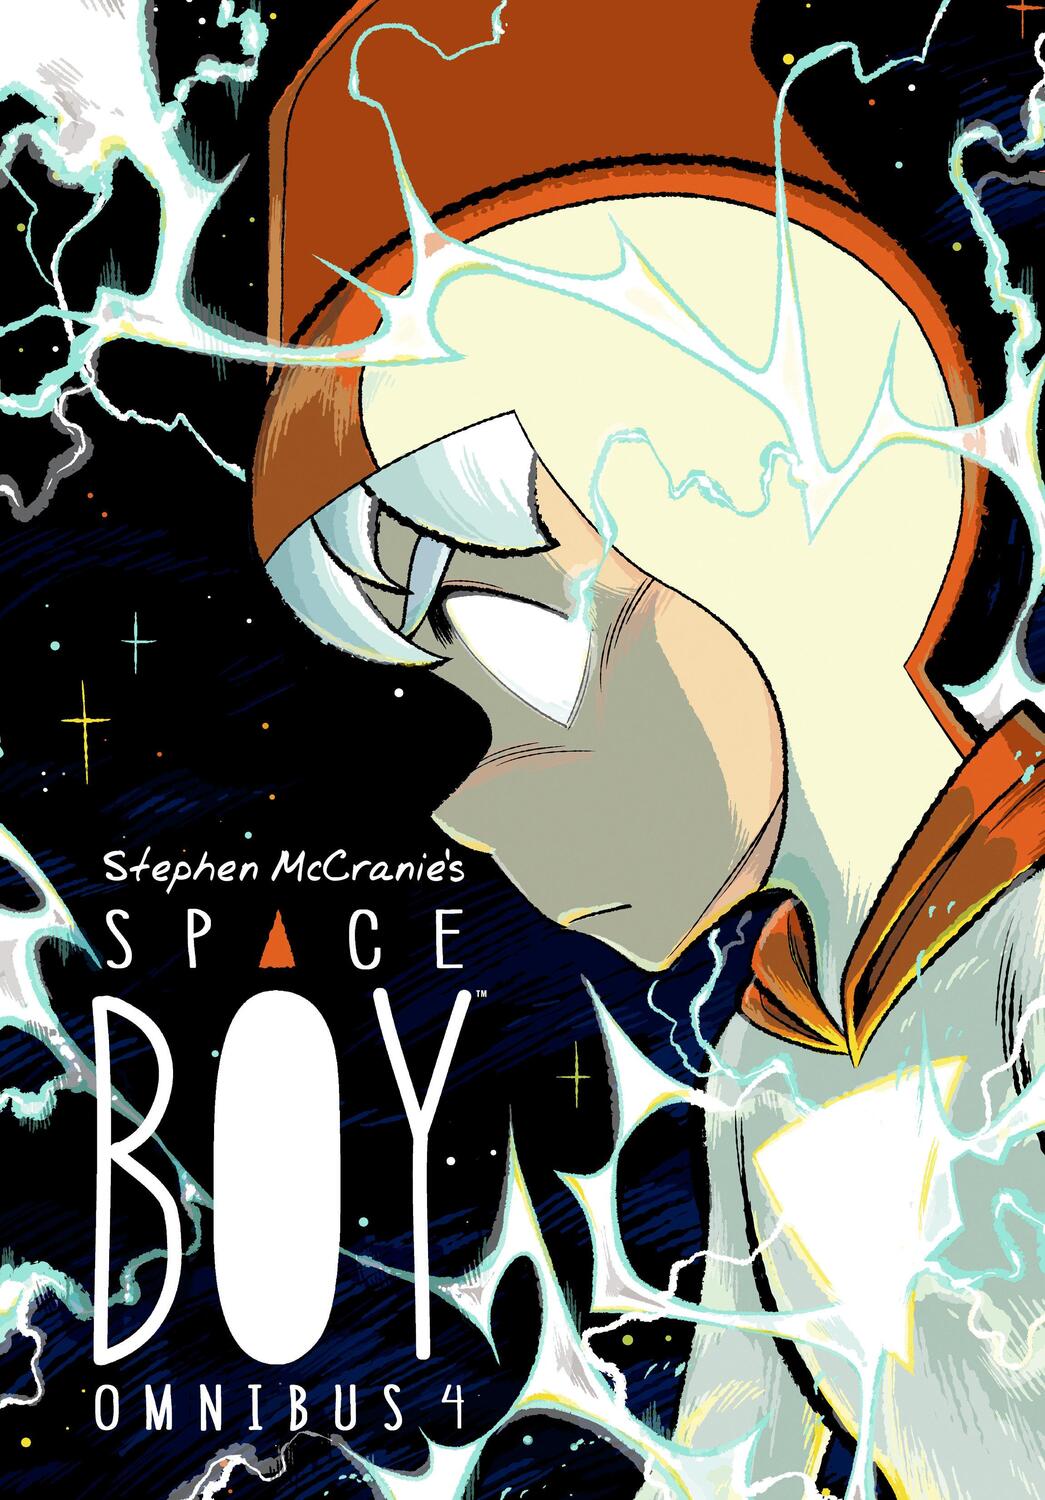 Cover: 9781506726465 | Stephen McCranie's Space Boy Omnibus Volume 4 | Stephen Mccranie